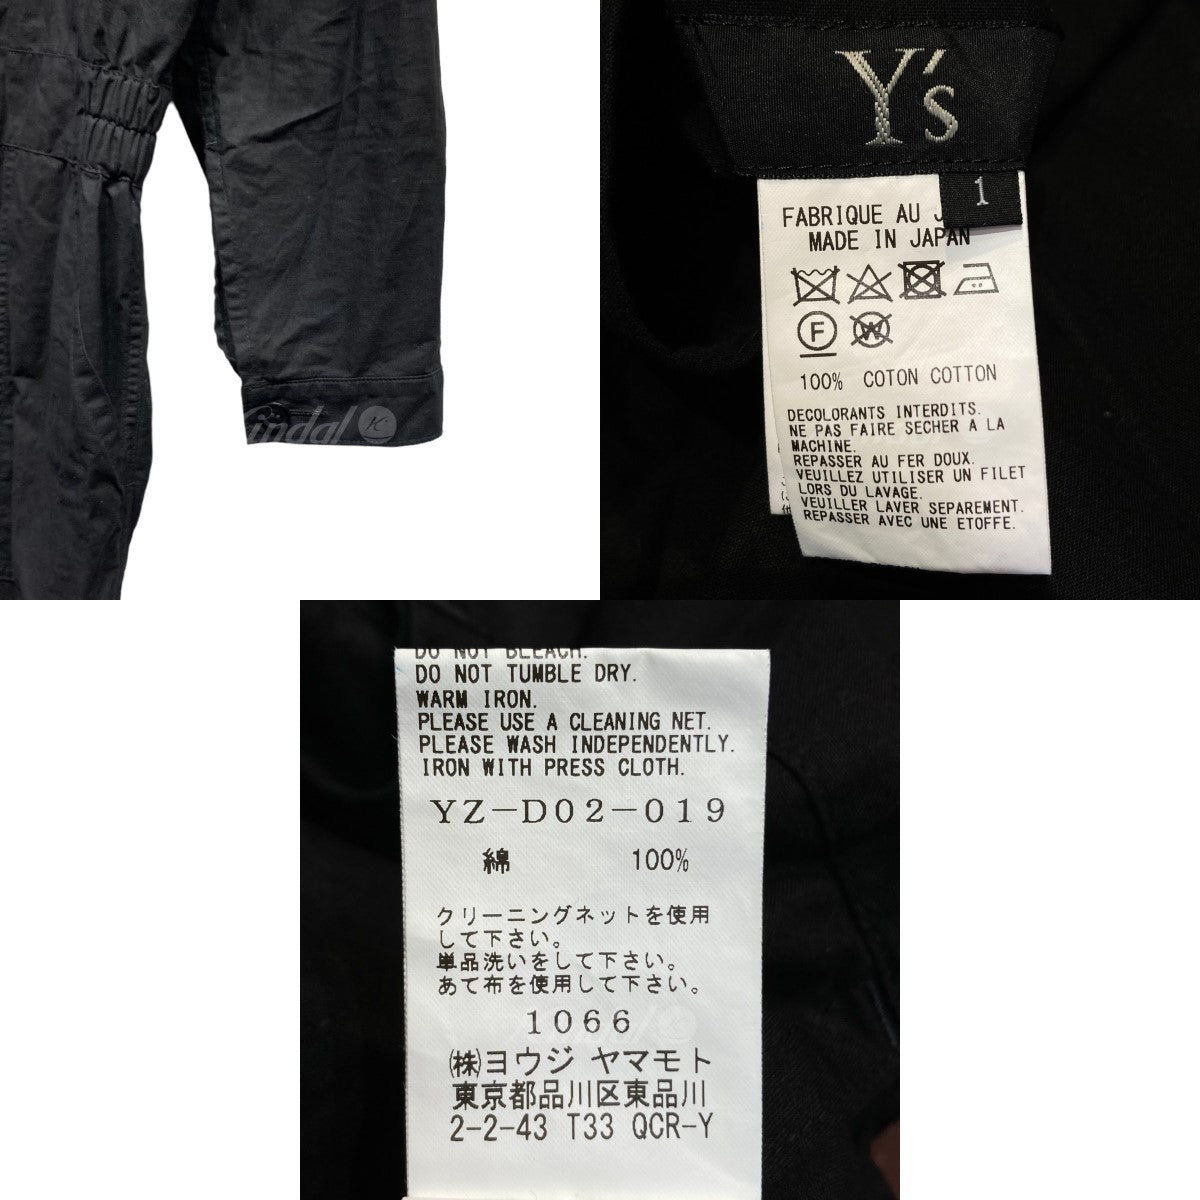 Y'S(ワイズ) JUMP SUIT ジャンプスーツ YZ-D02-019【値下げ】 YZ-D02 